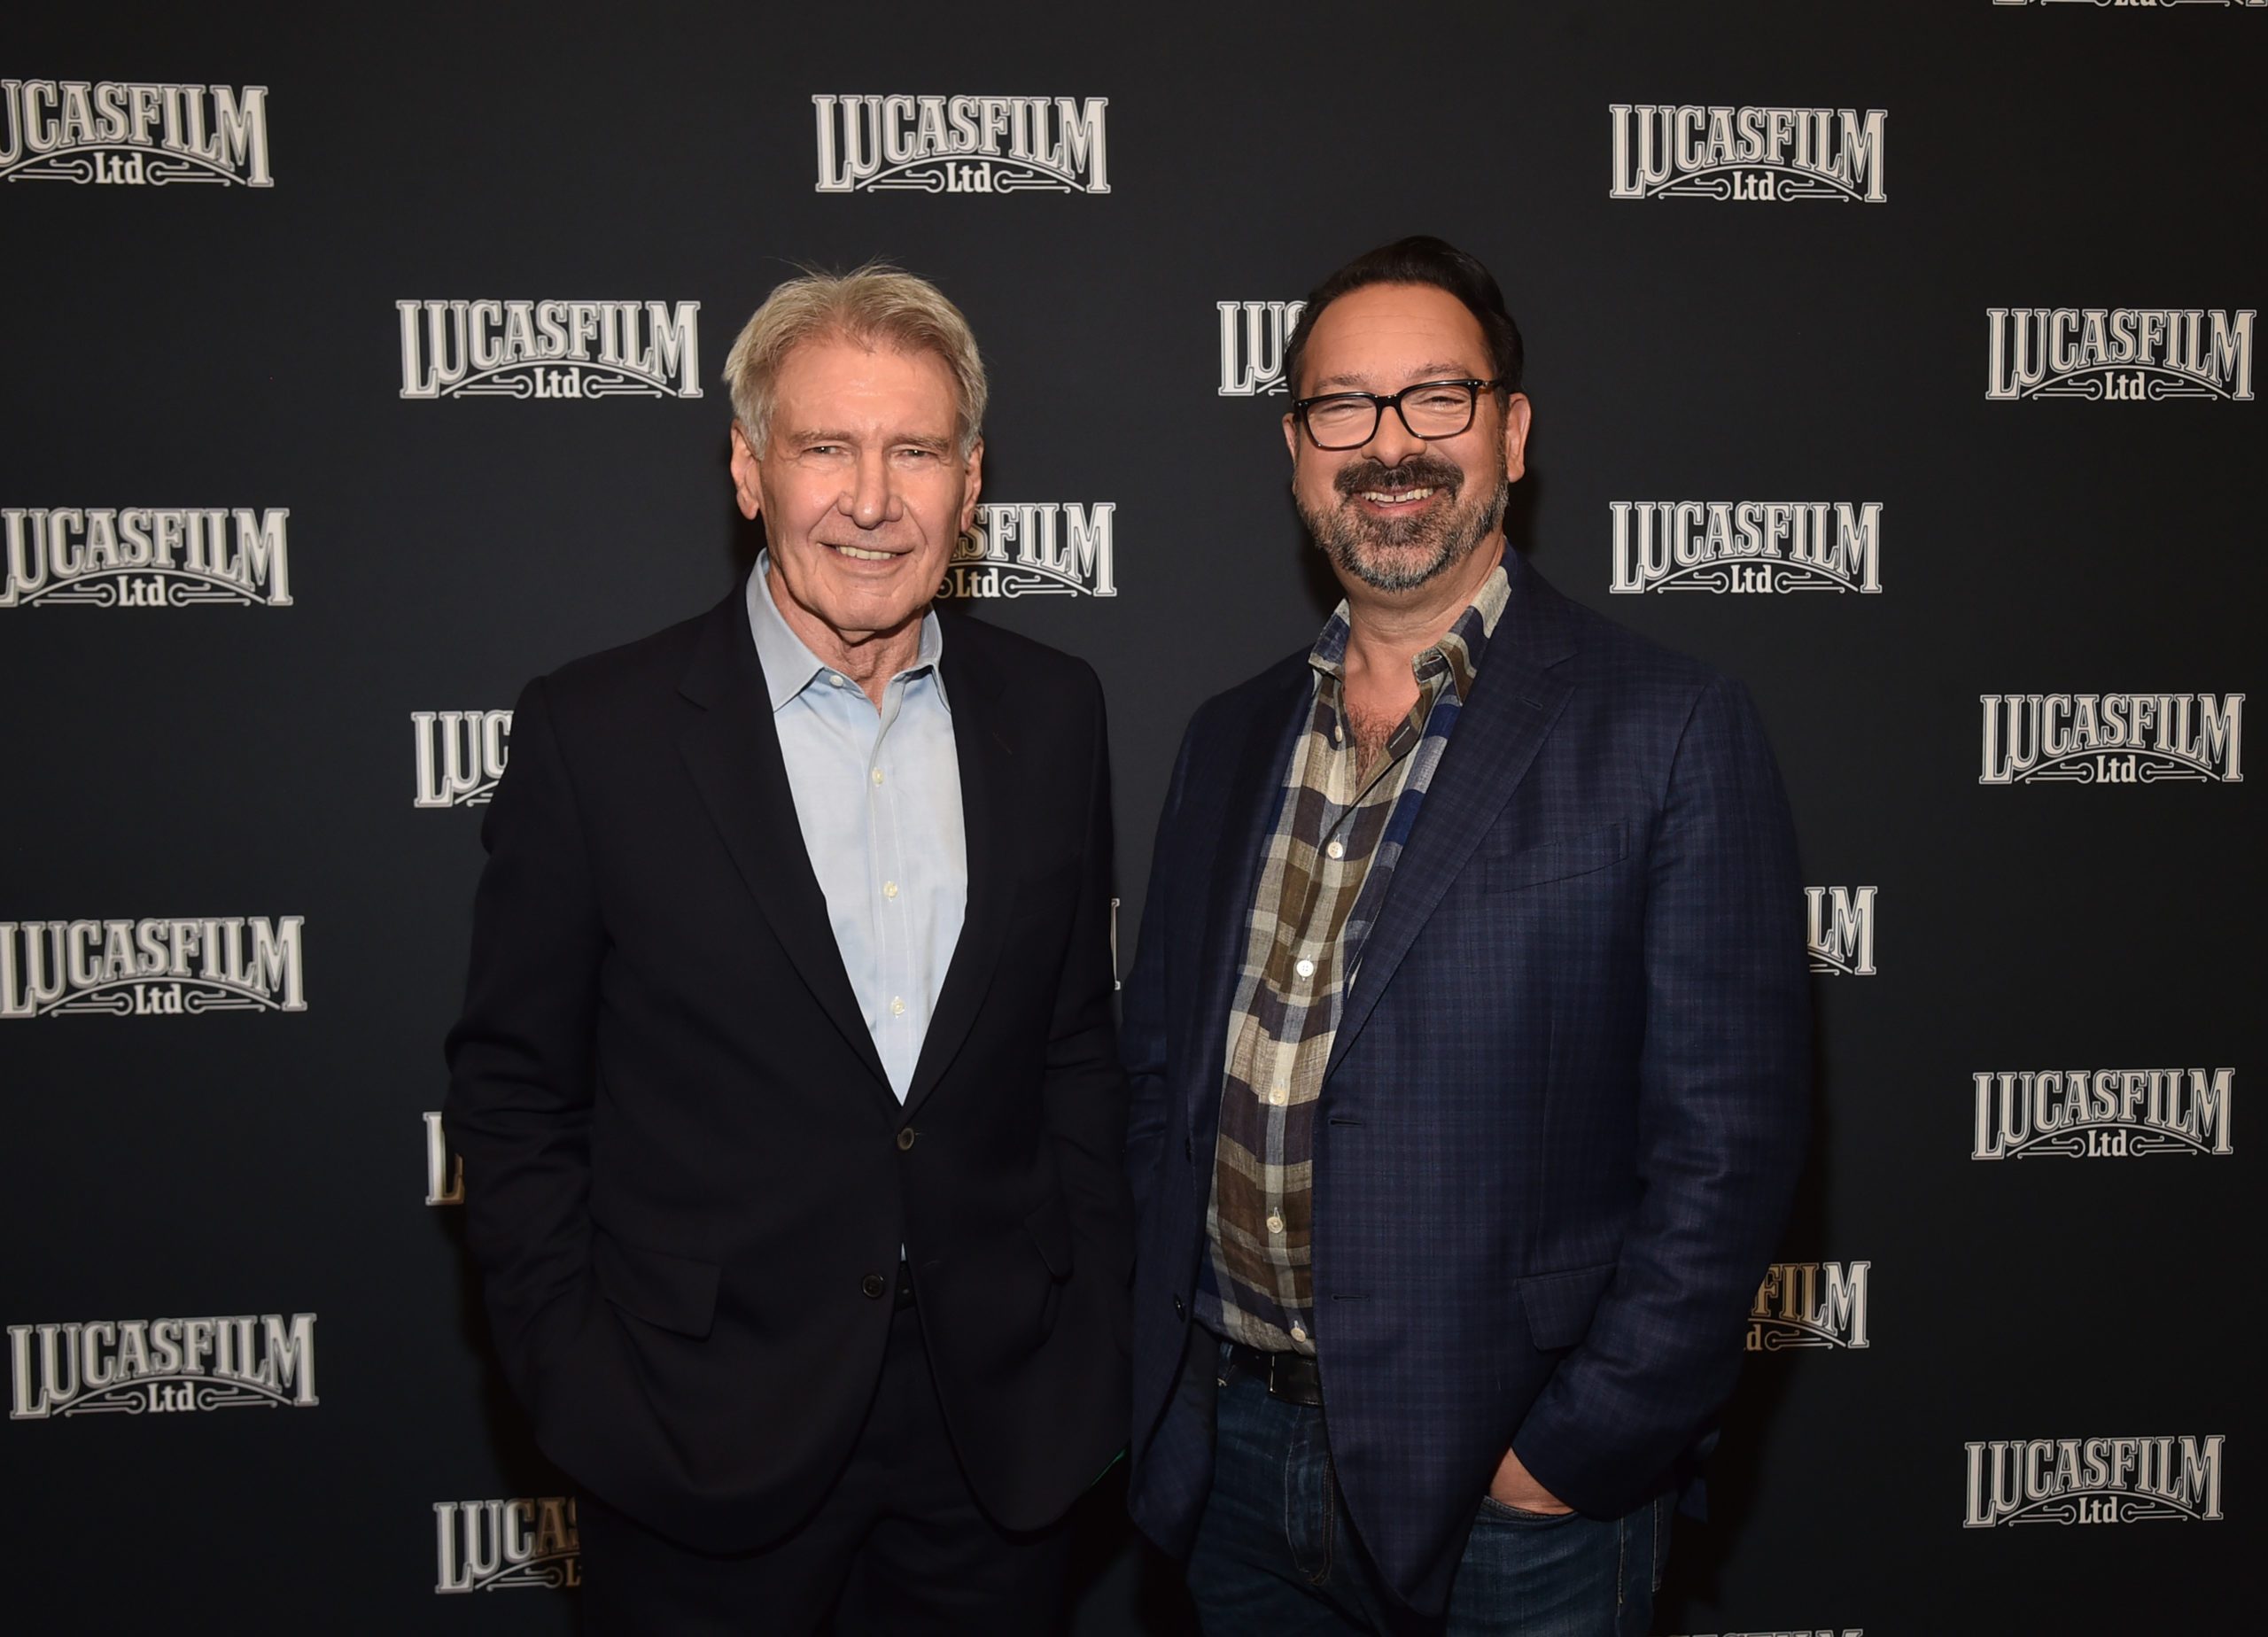 Indiana Jones 5 Team Celebrates Legendary Composer John Williams and Reveal Release Date - The Illuminerdi